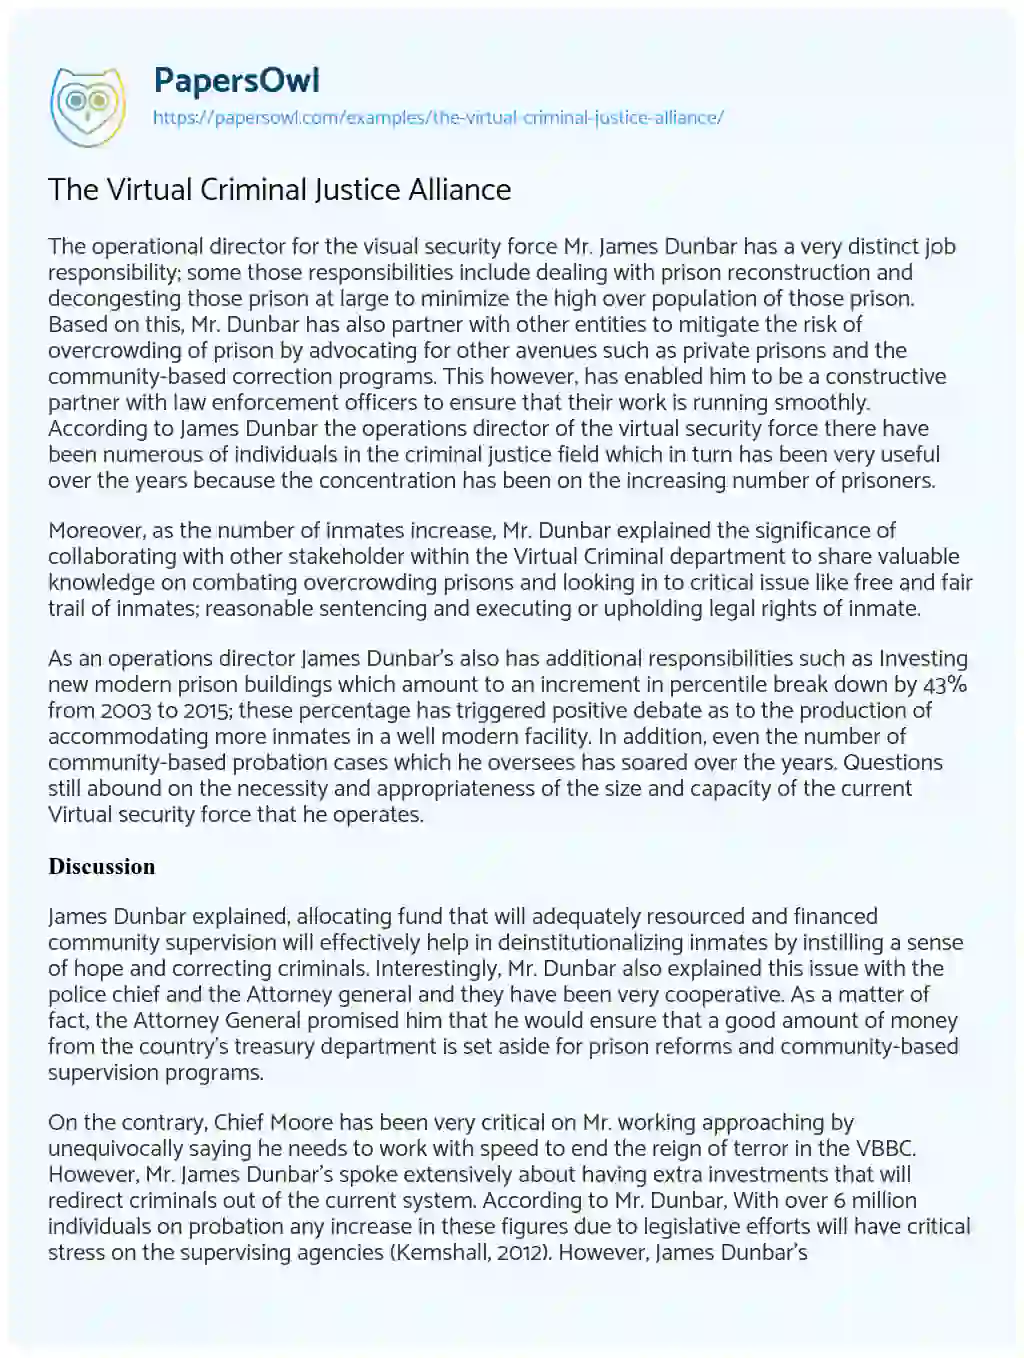 The Virtual Criminal Justice Alliance essay